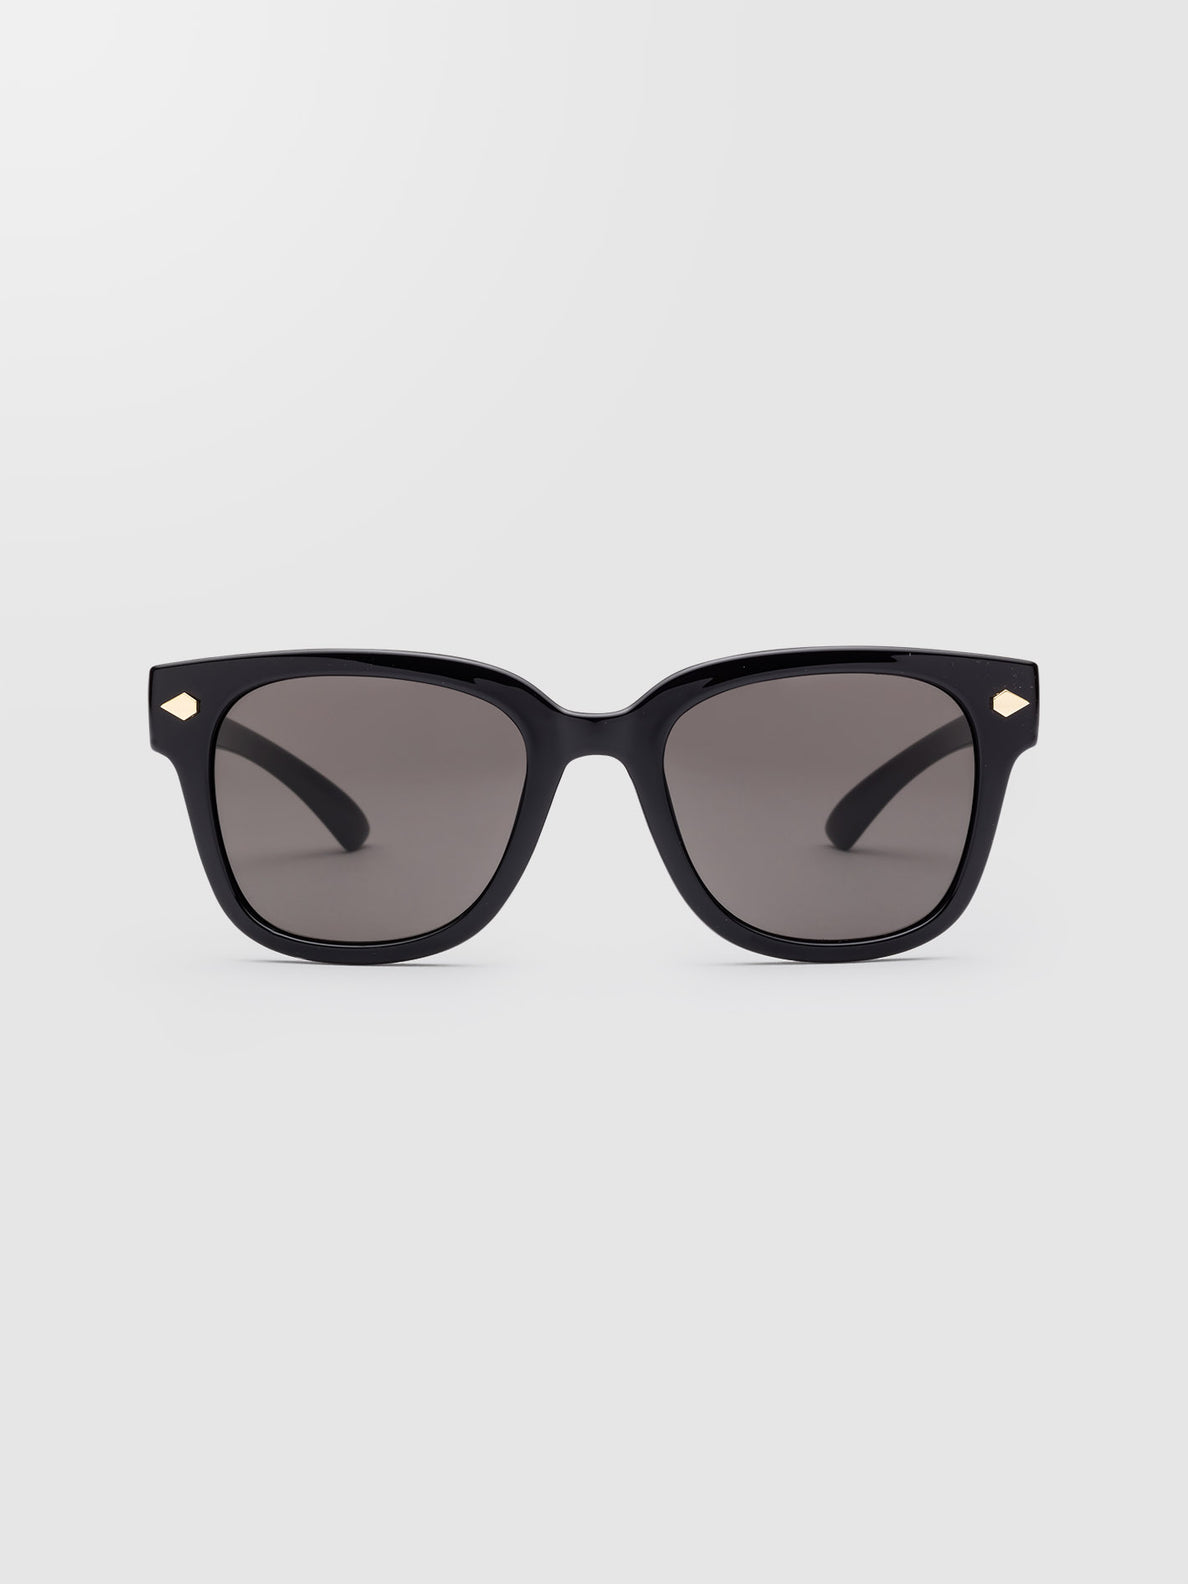 Freestyle Gloss Black Sunglasses (Gray Lens) - GRAY